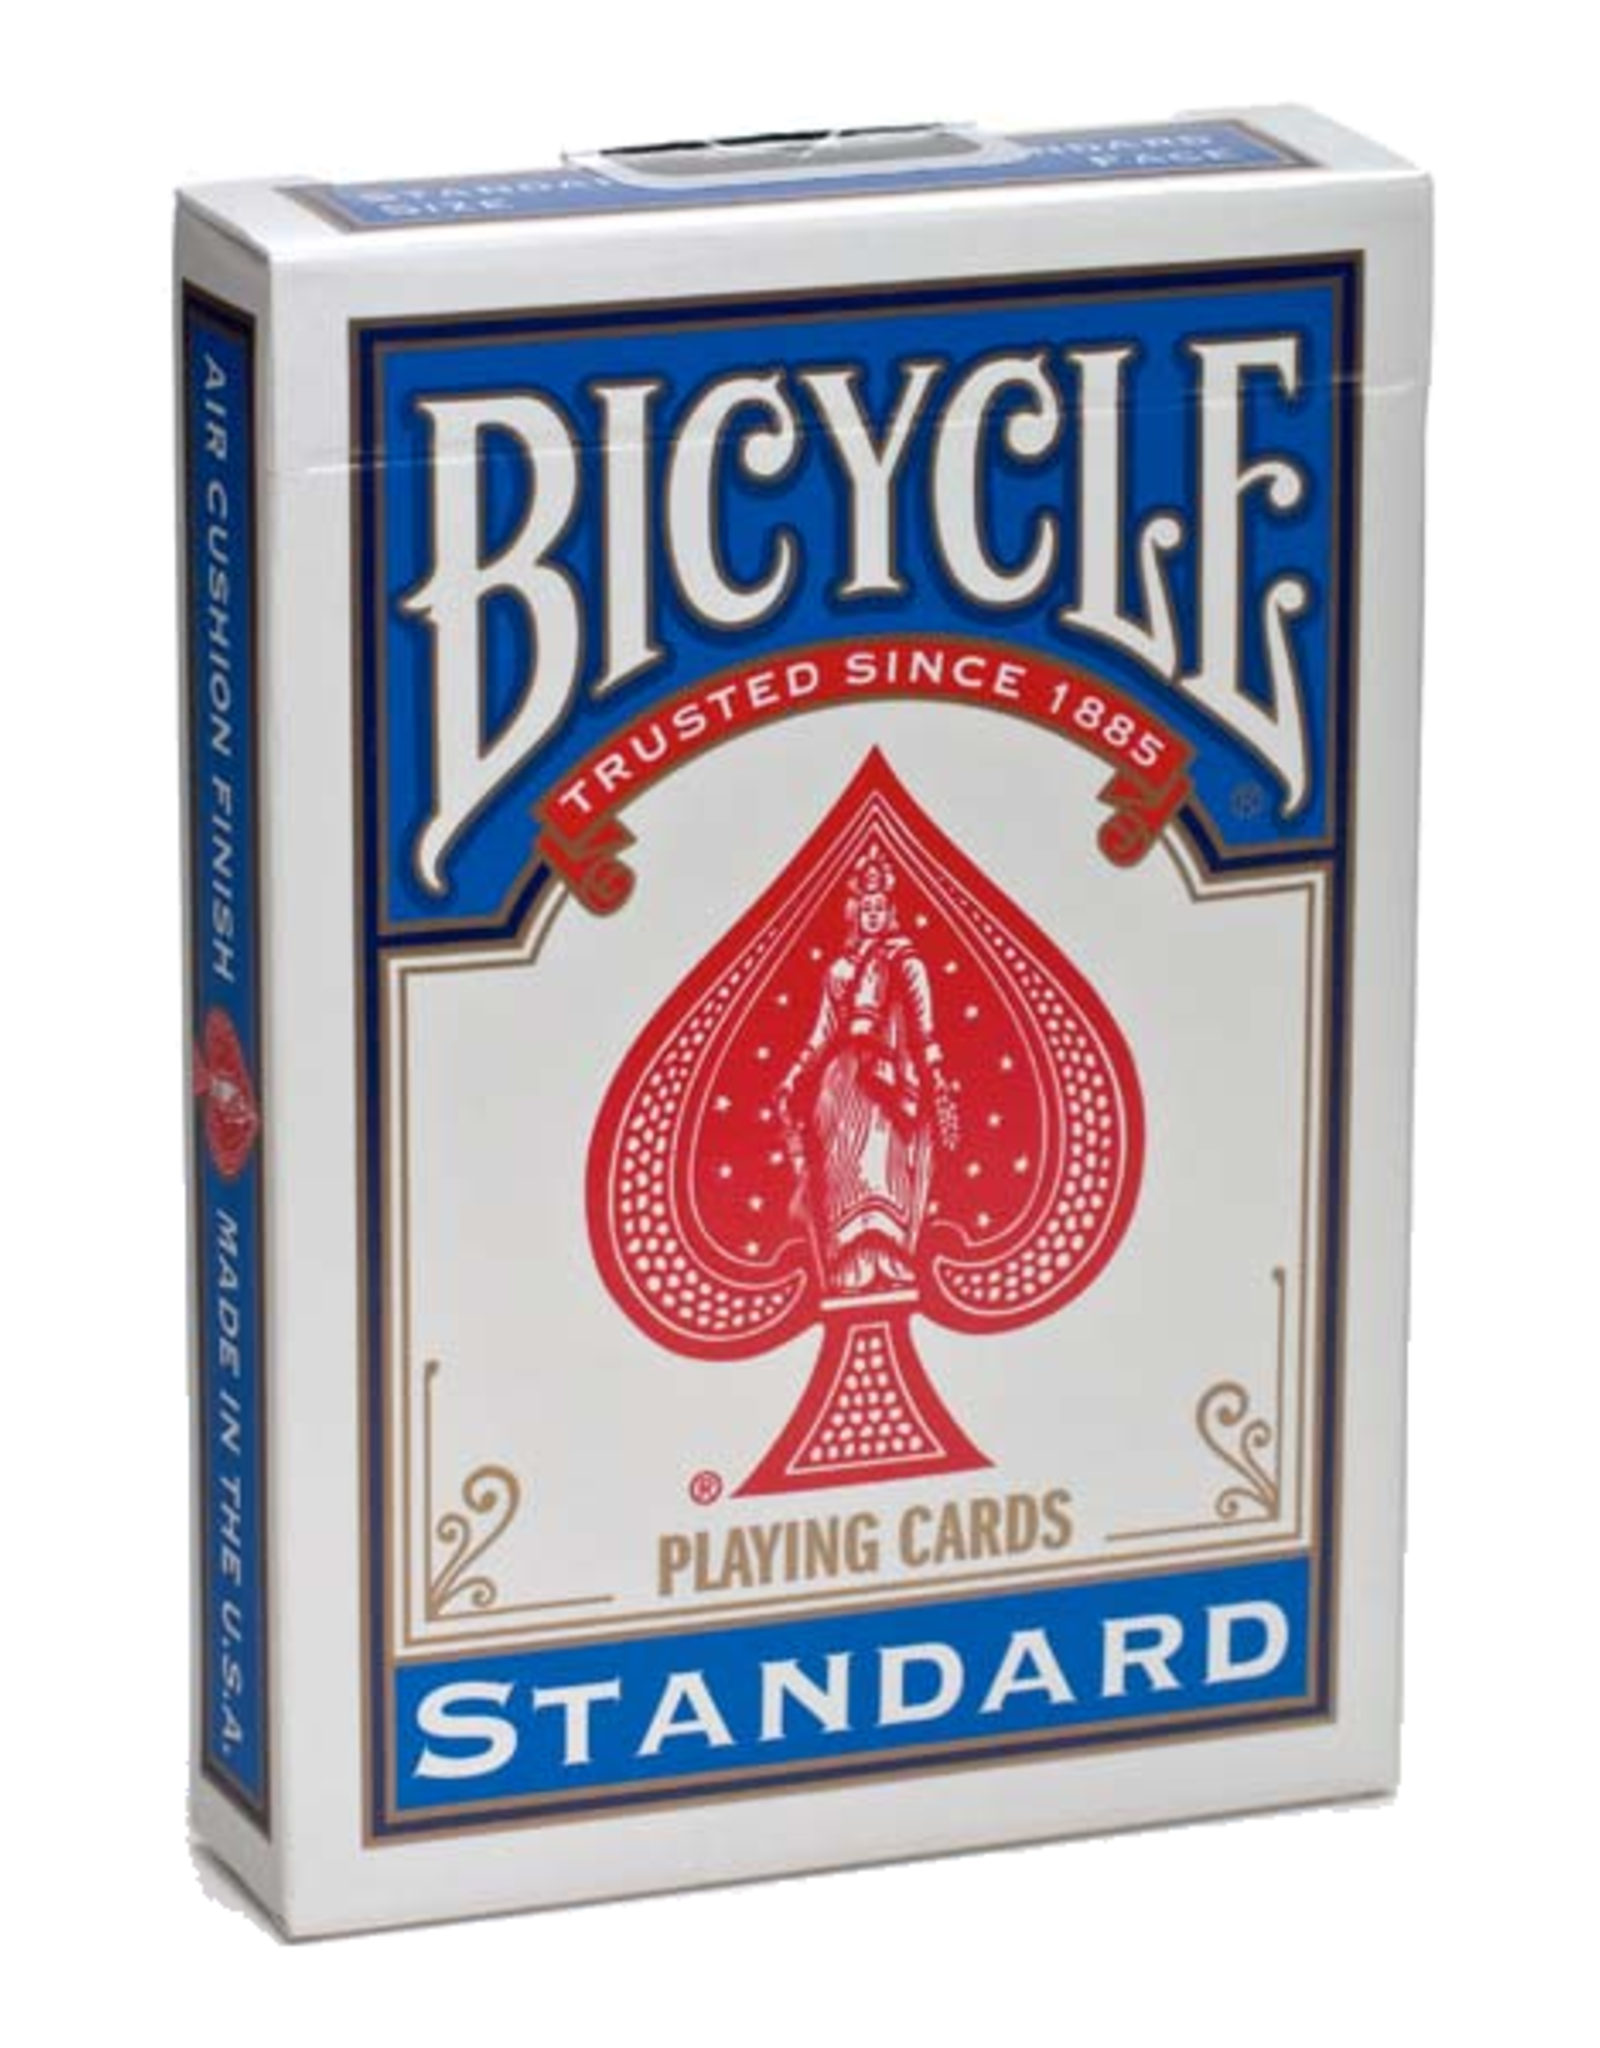 Bicycle Deck Standard Poker Cards | Impulse Games and Hobbies